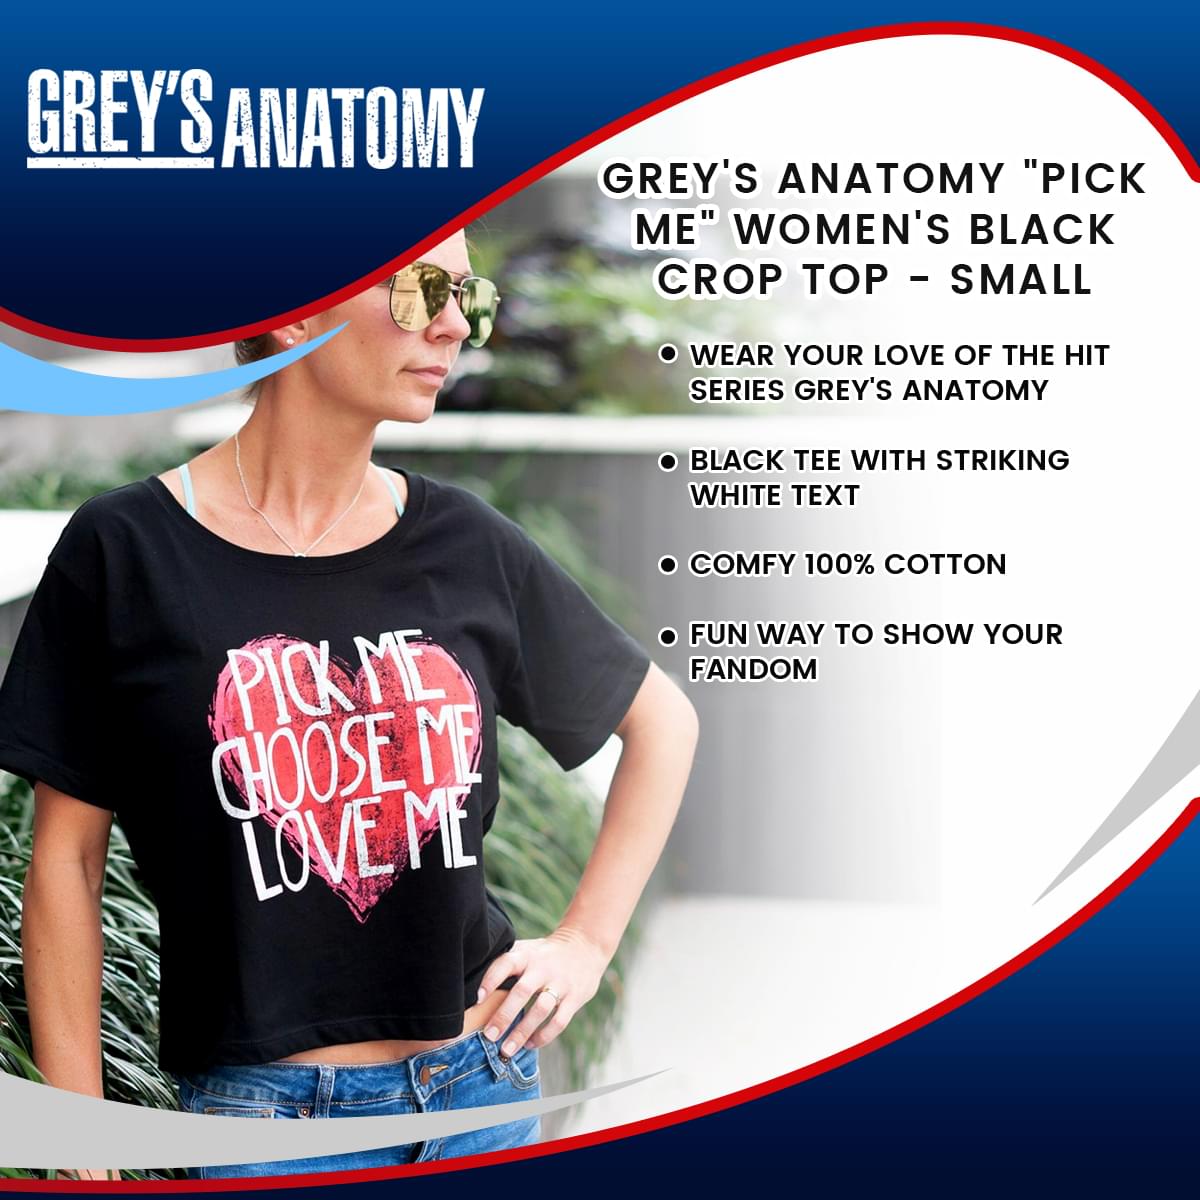 Greys Anatomy "Pick Me" Women's Black Crop Top